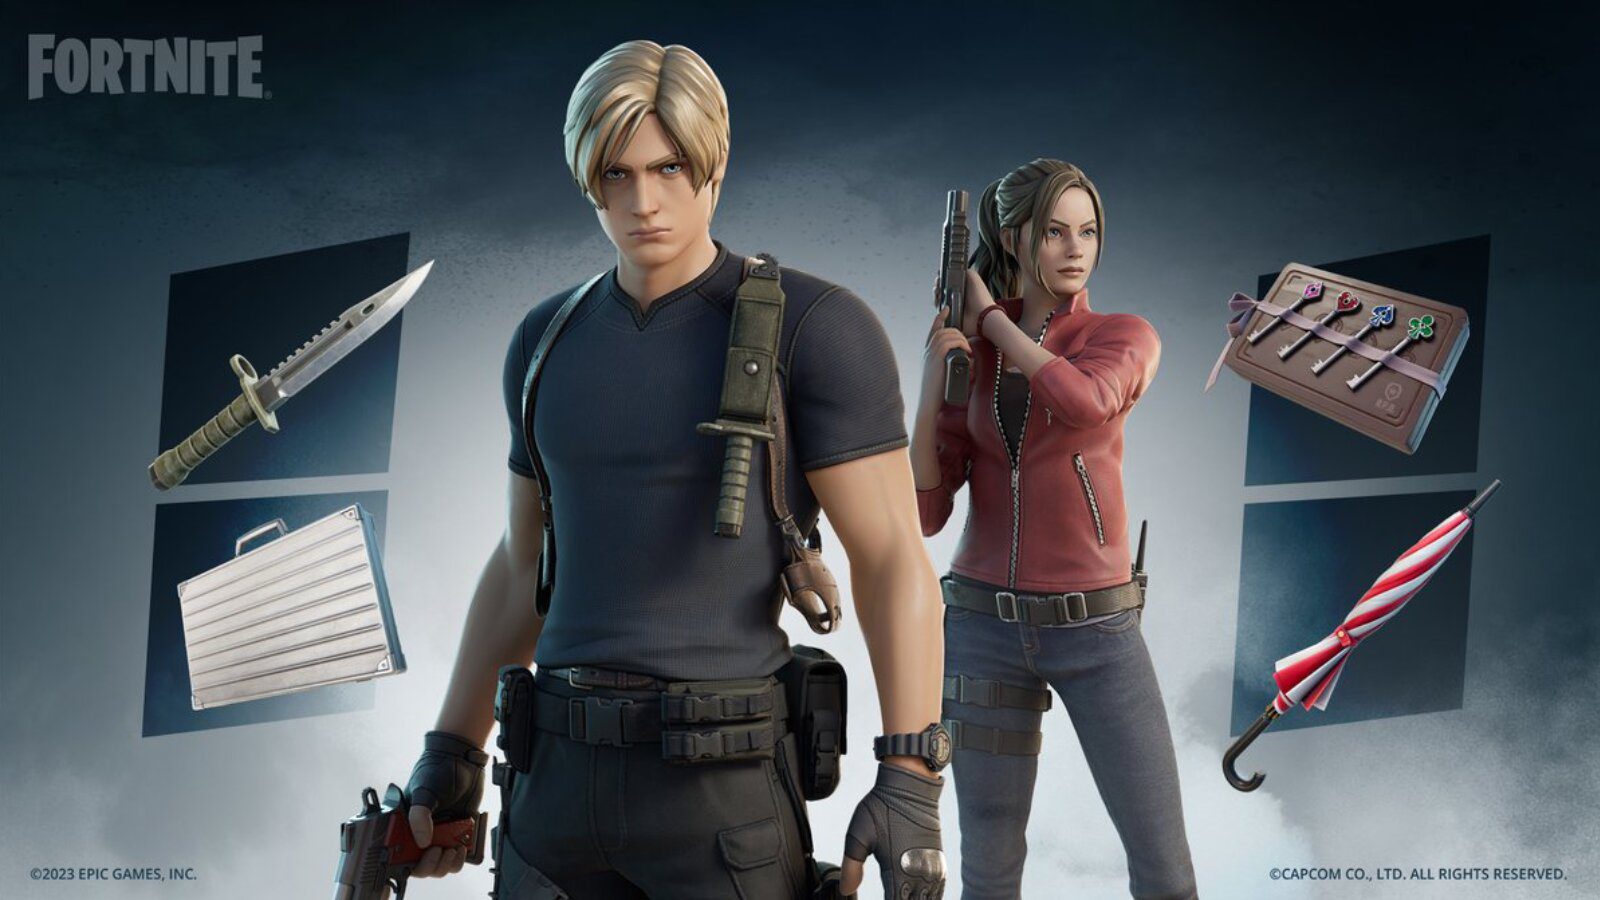 Fortnite Скины x Resident Evil: Леон и Клэр поступят в магазин предметов